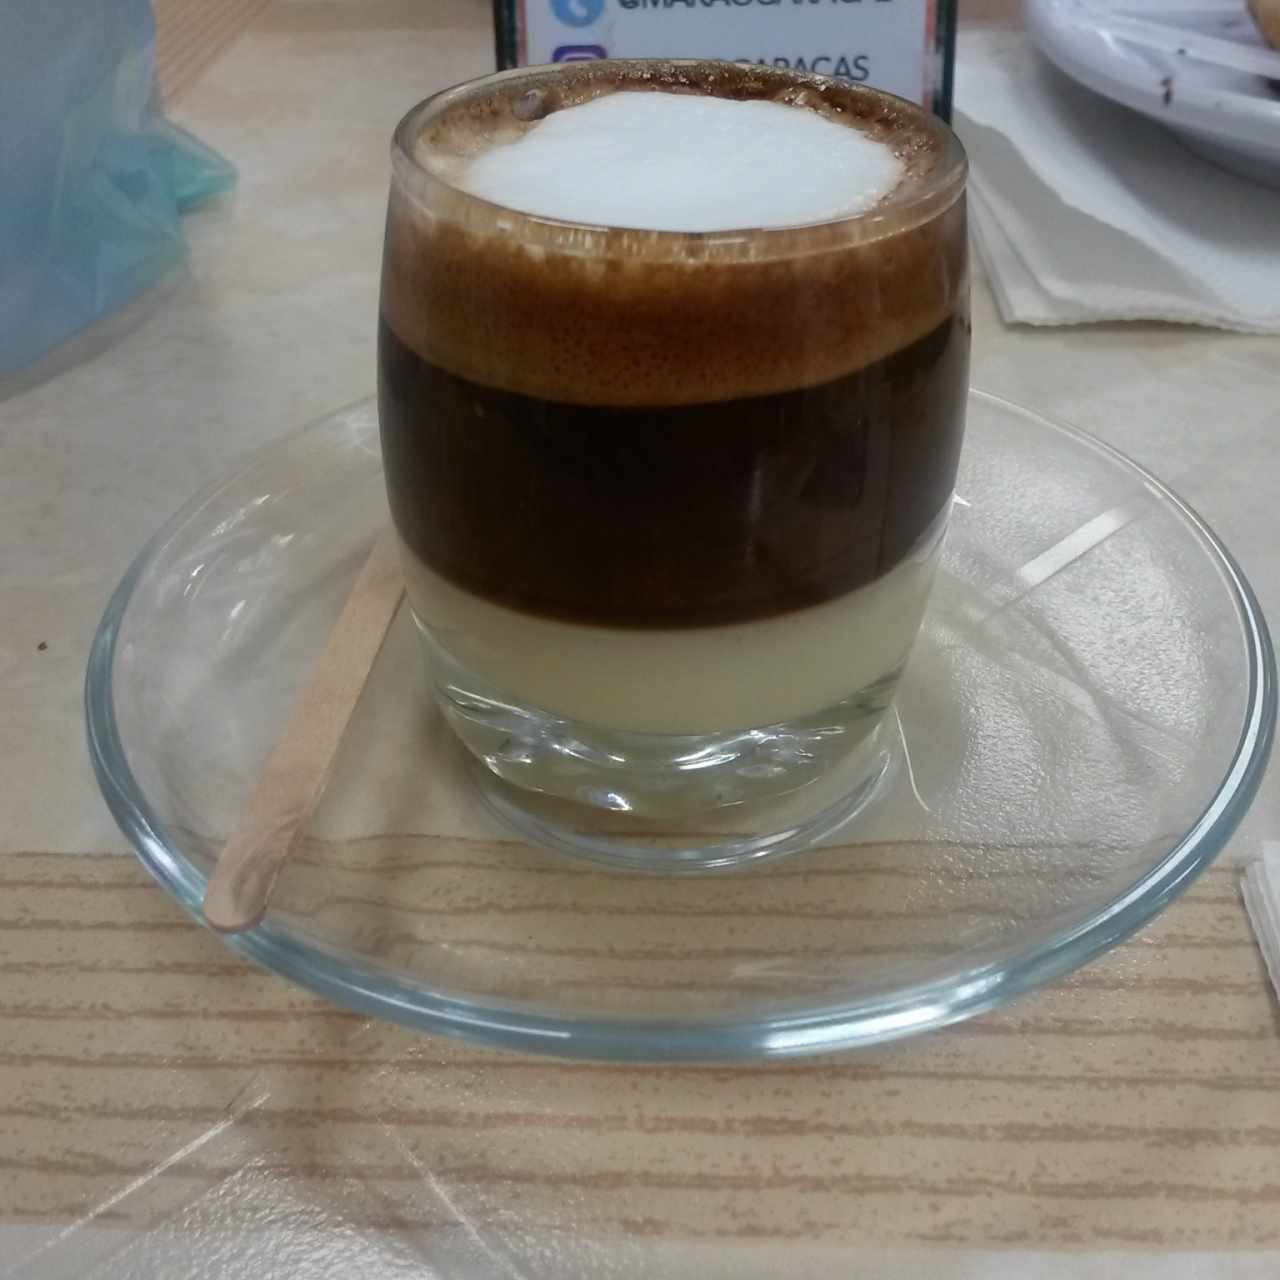 Café Bombón